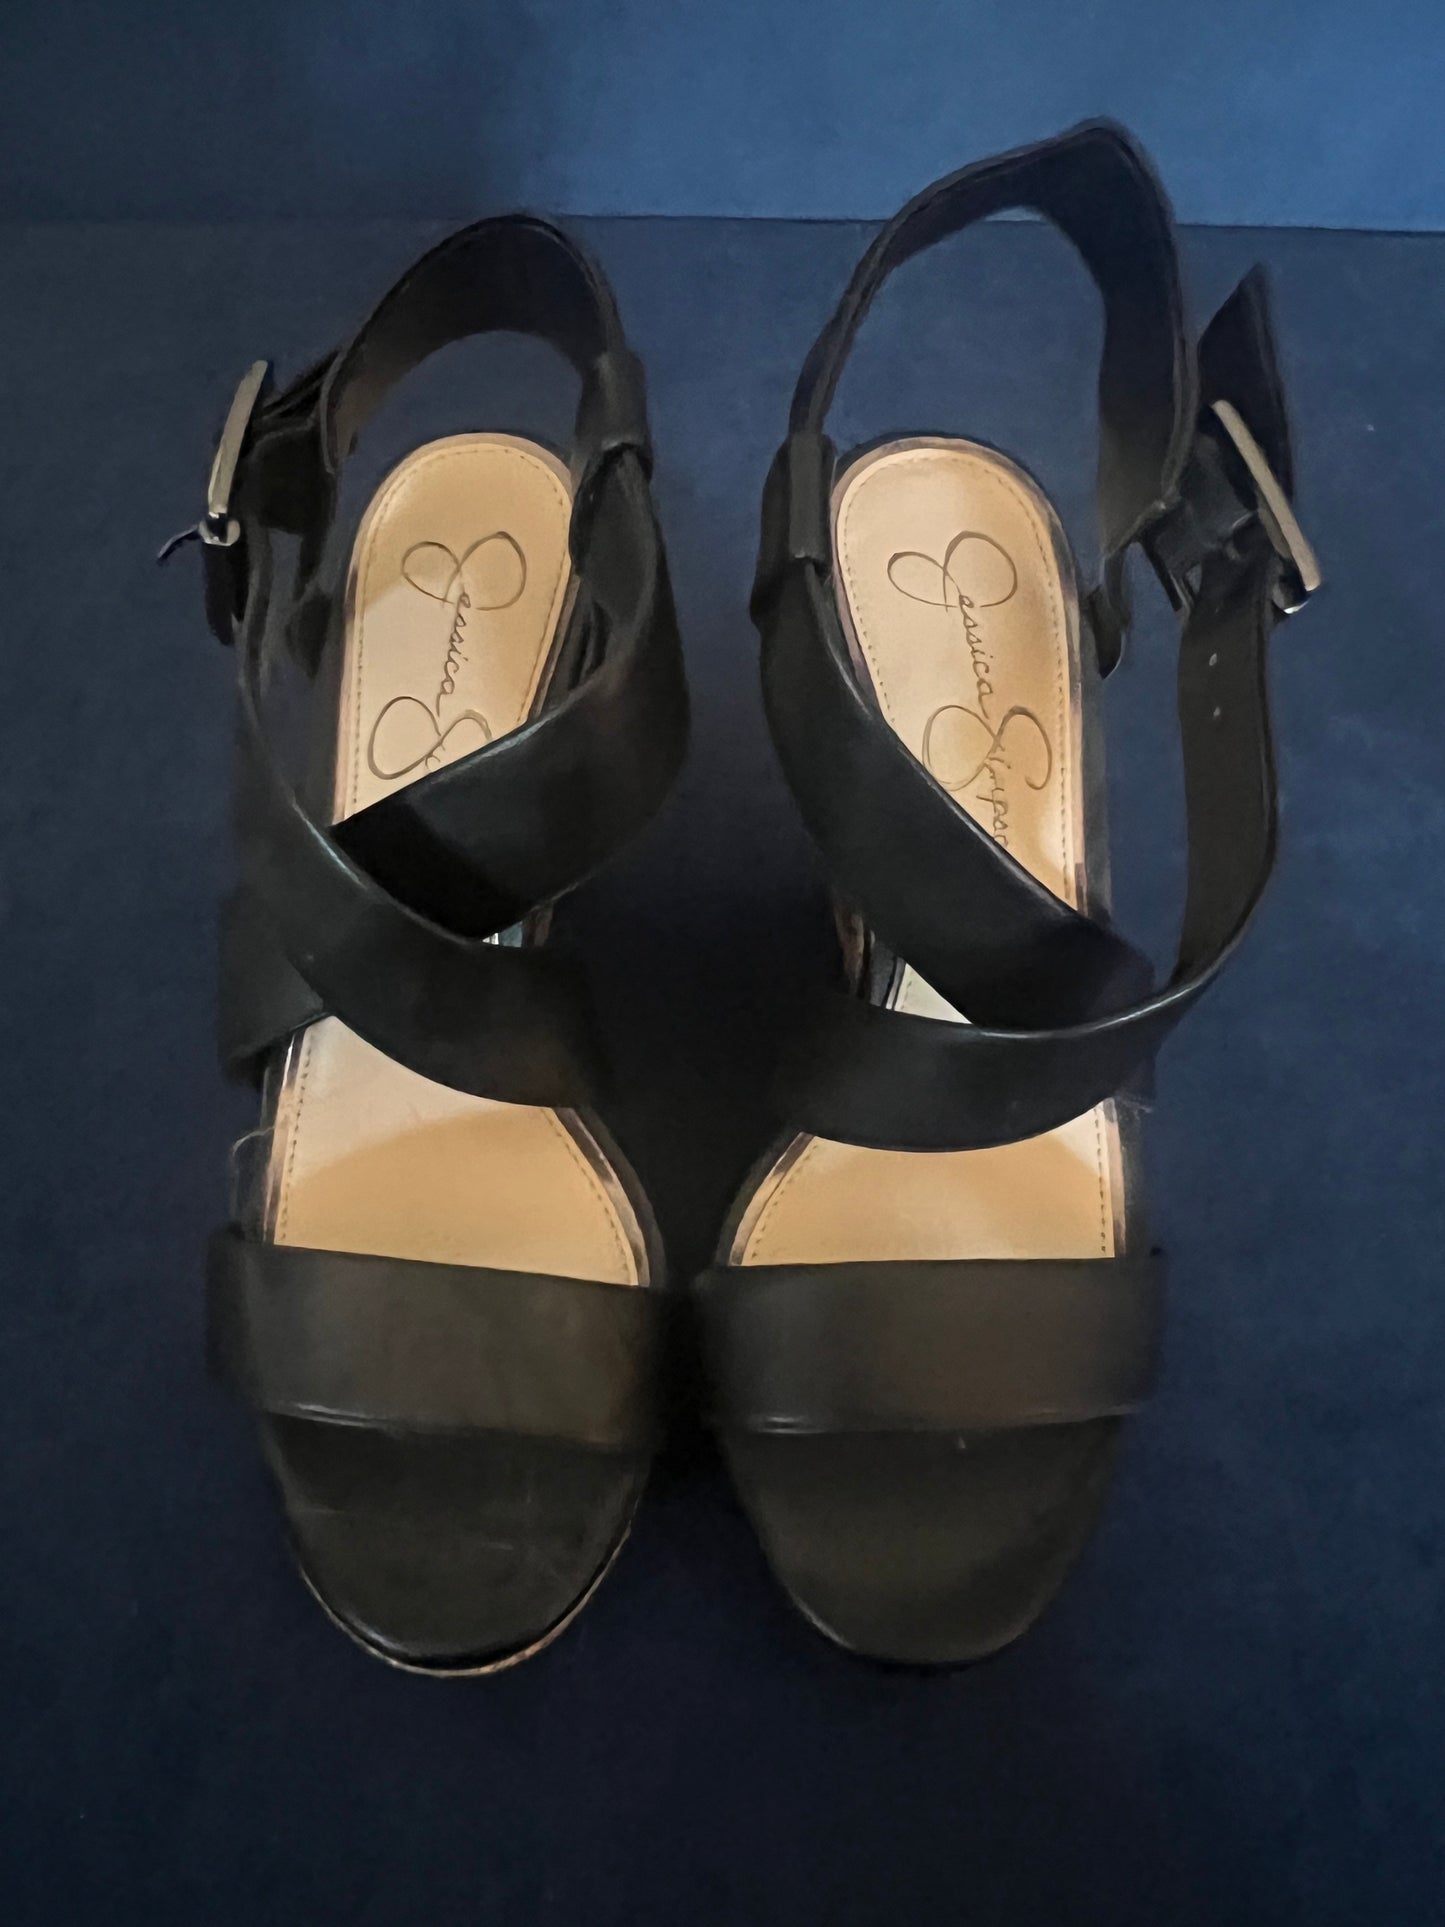 Jessica Simpson Wedge Sandals - 7.5 - New